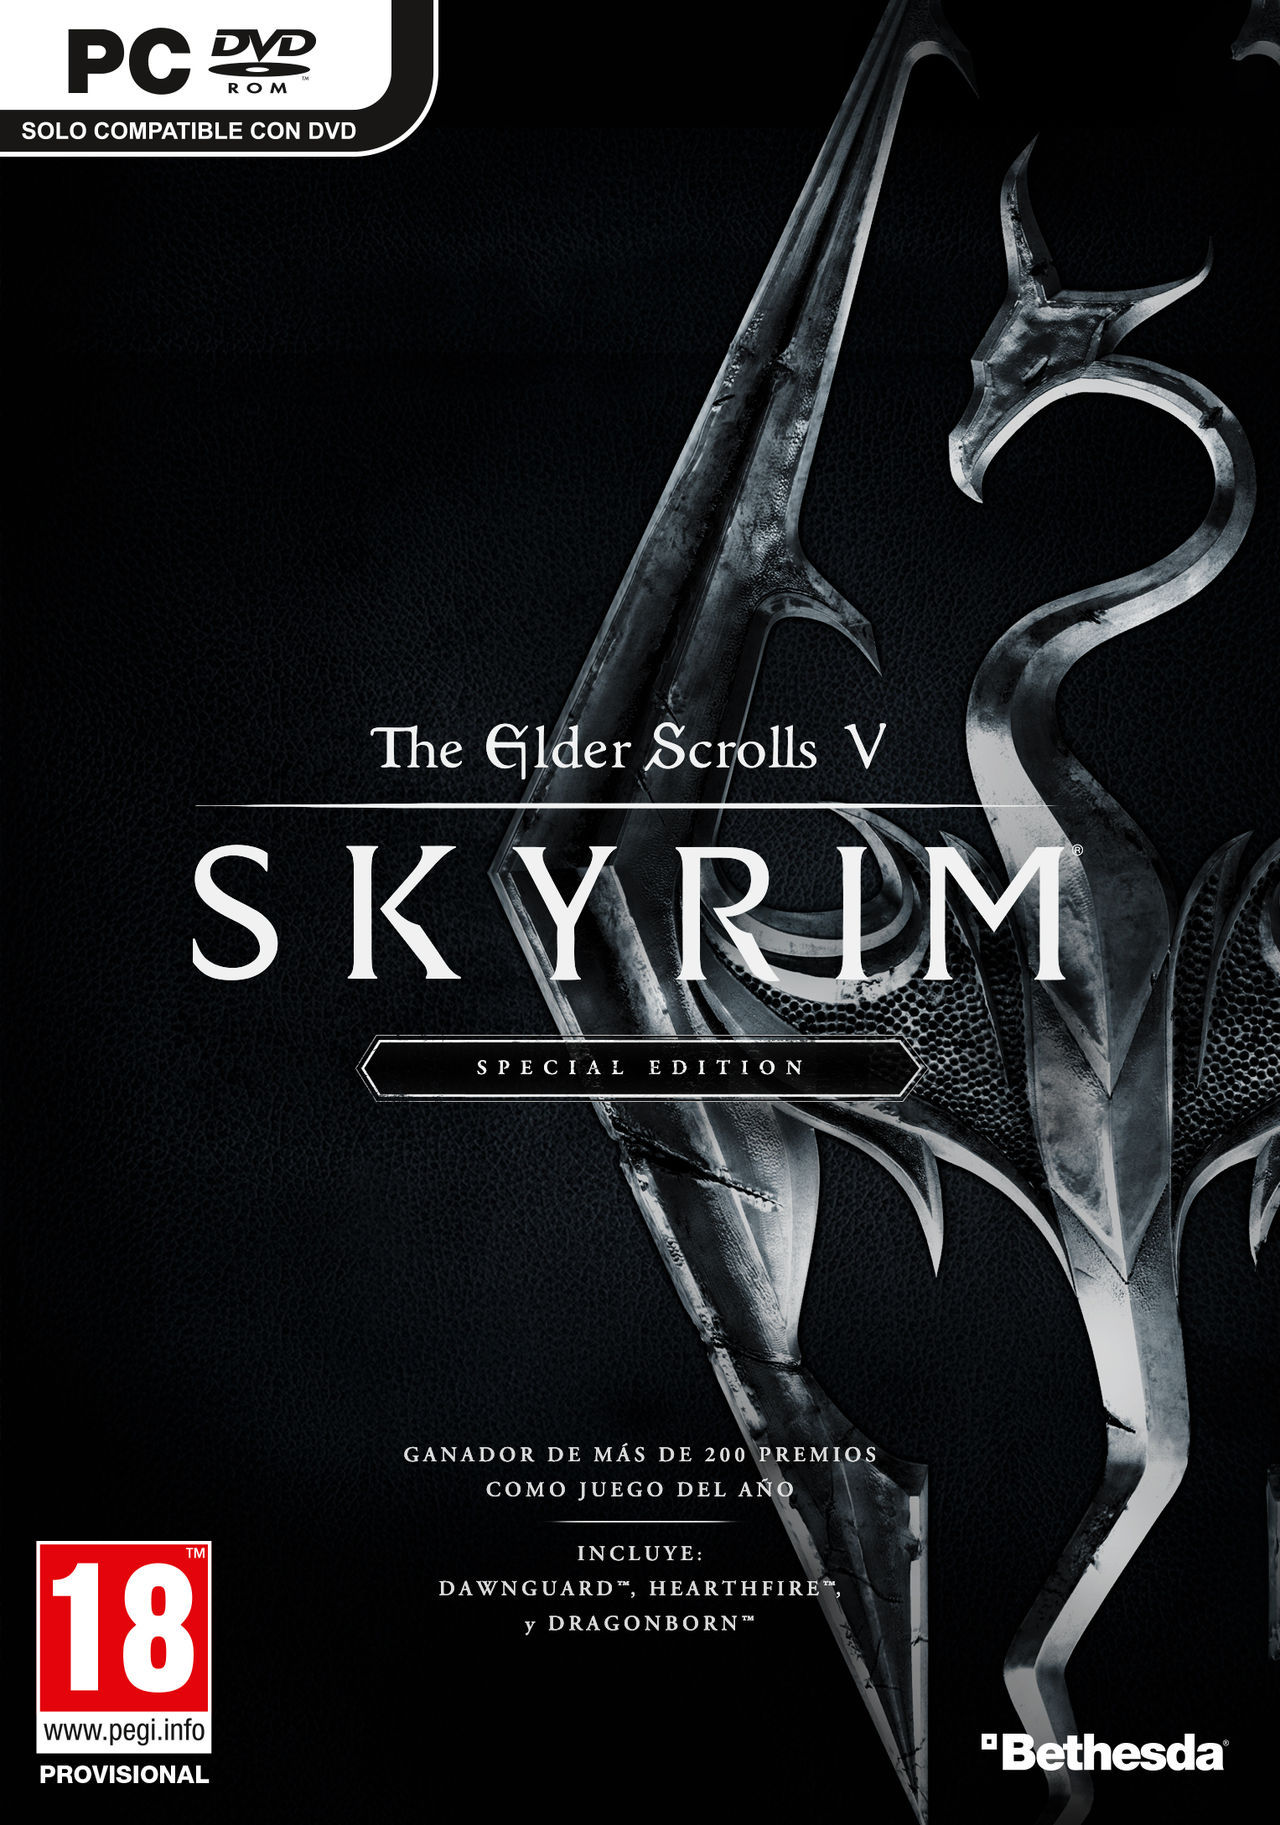 Trucos The Elder Scrolls V: Skyrim: Special Edition - PC - Claves, Guías